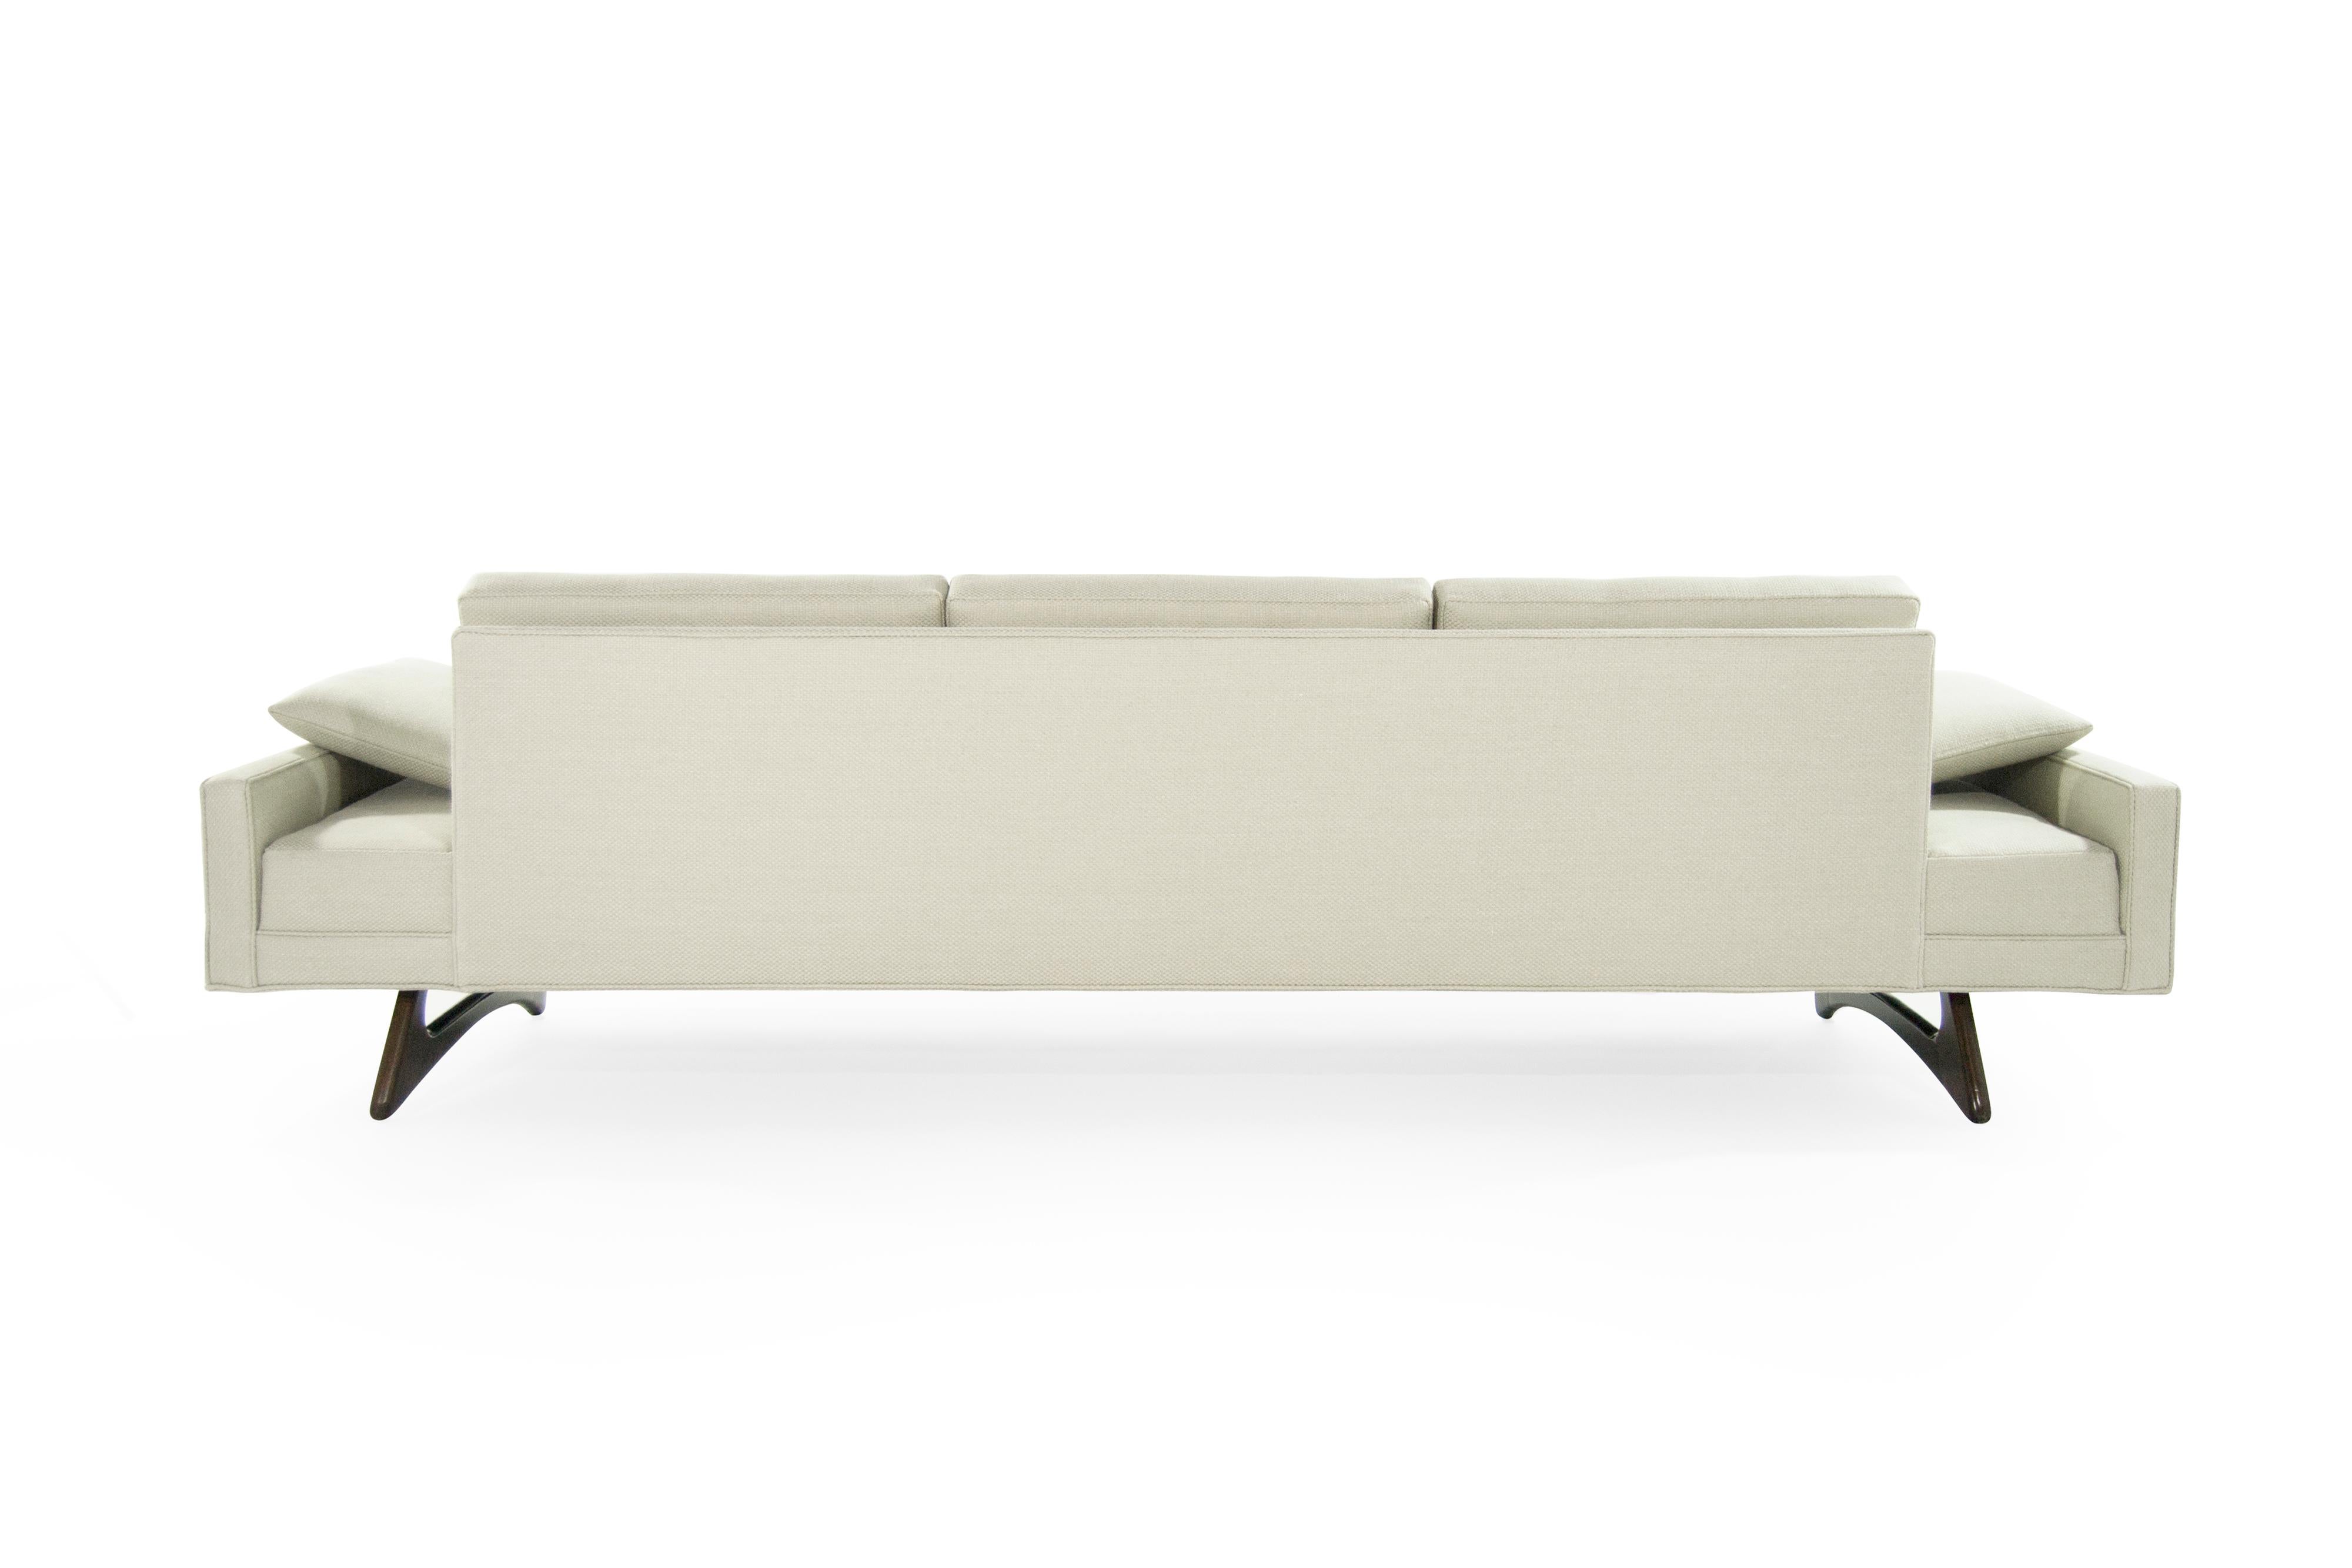 20th Century Adrian Pearsall for Craft Associates Sofa, Model 2408